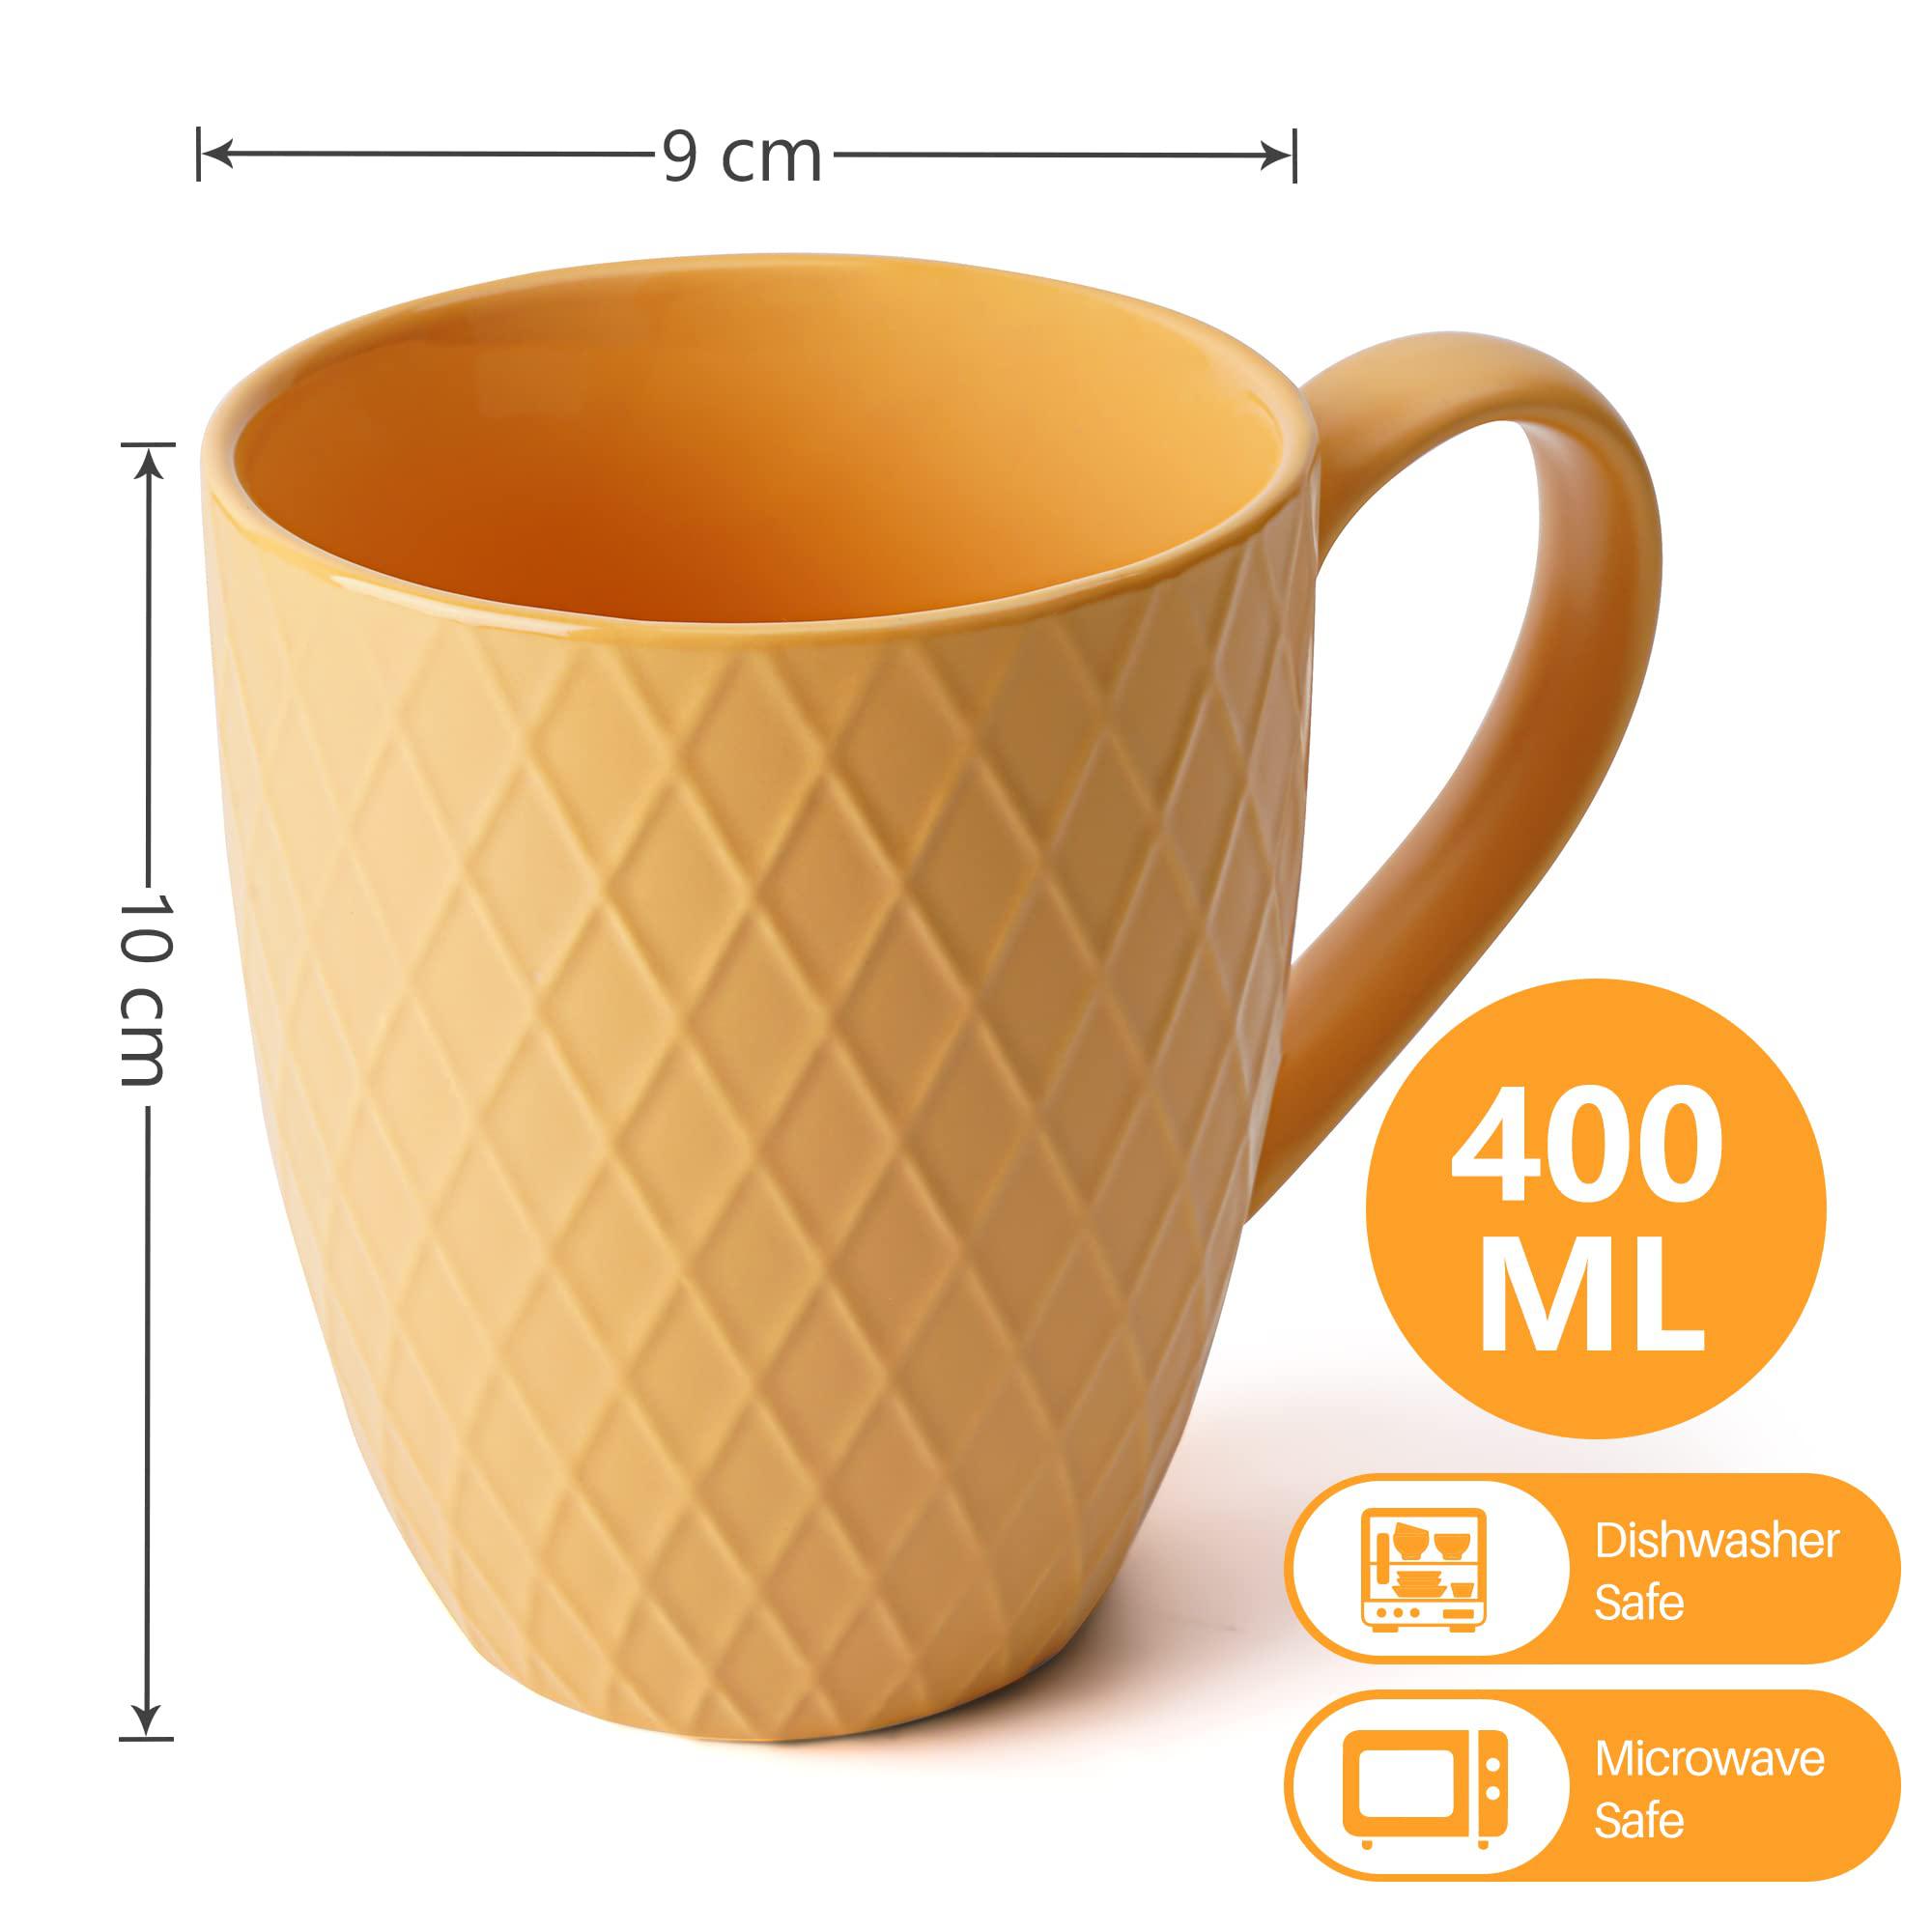 miamio - coffee mugs set of 6 / coffee cups - 6 x 12 oz ceramic mugs - large coffee mugs - microwave & dishwasher safe - palm